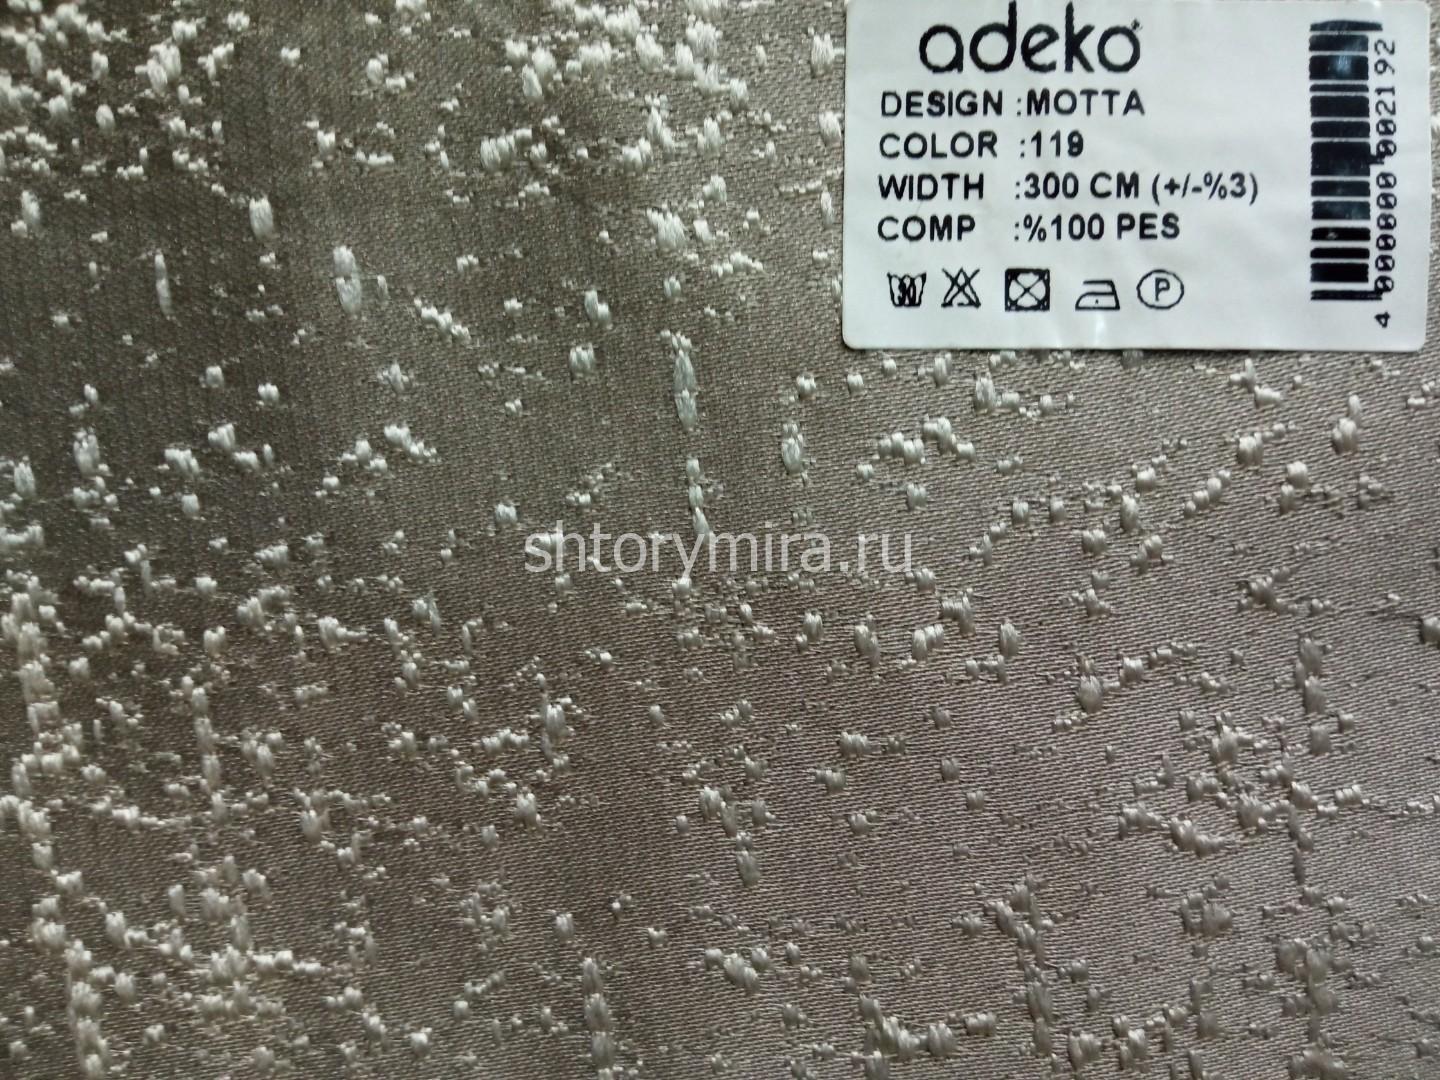 Ткань Motta-119 Adeko